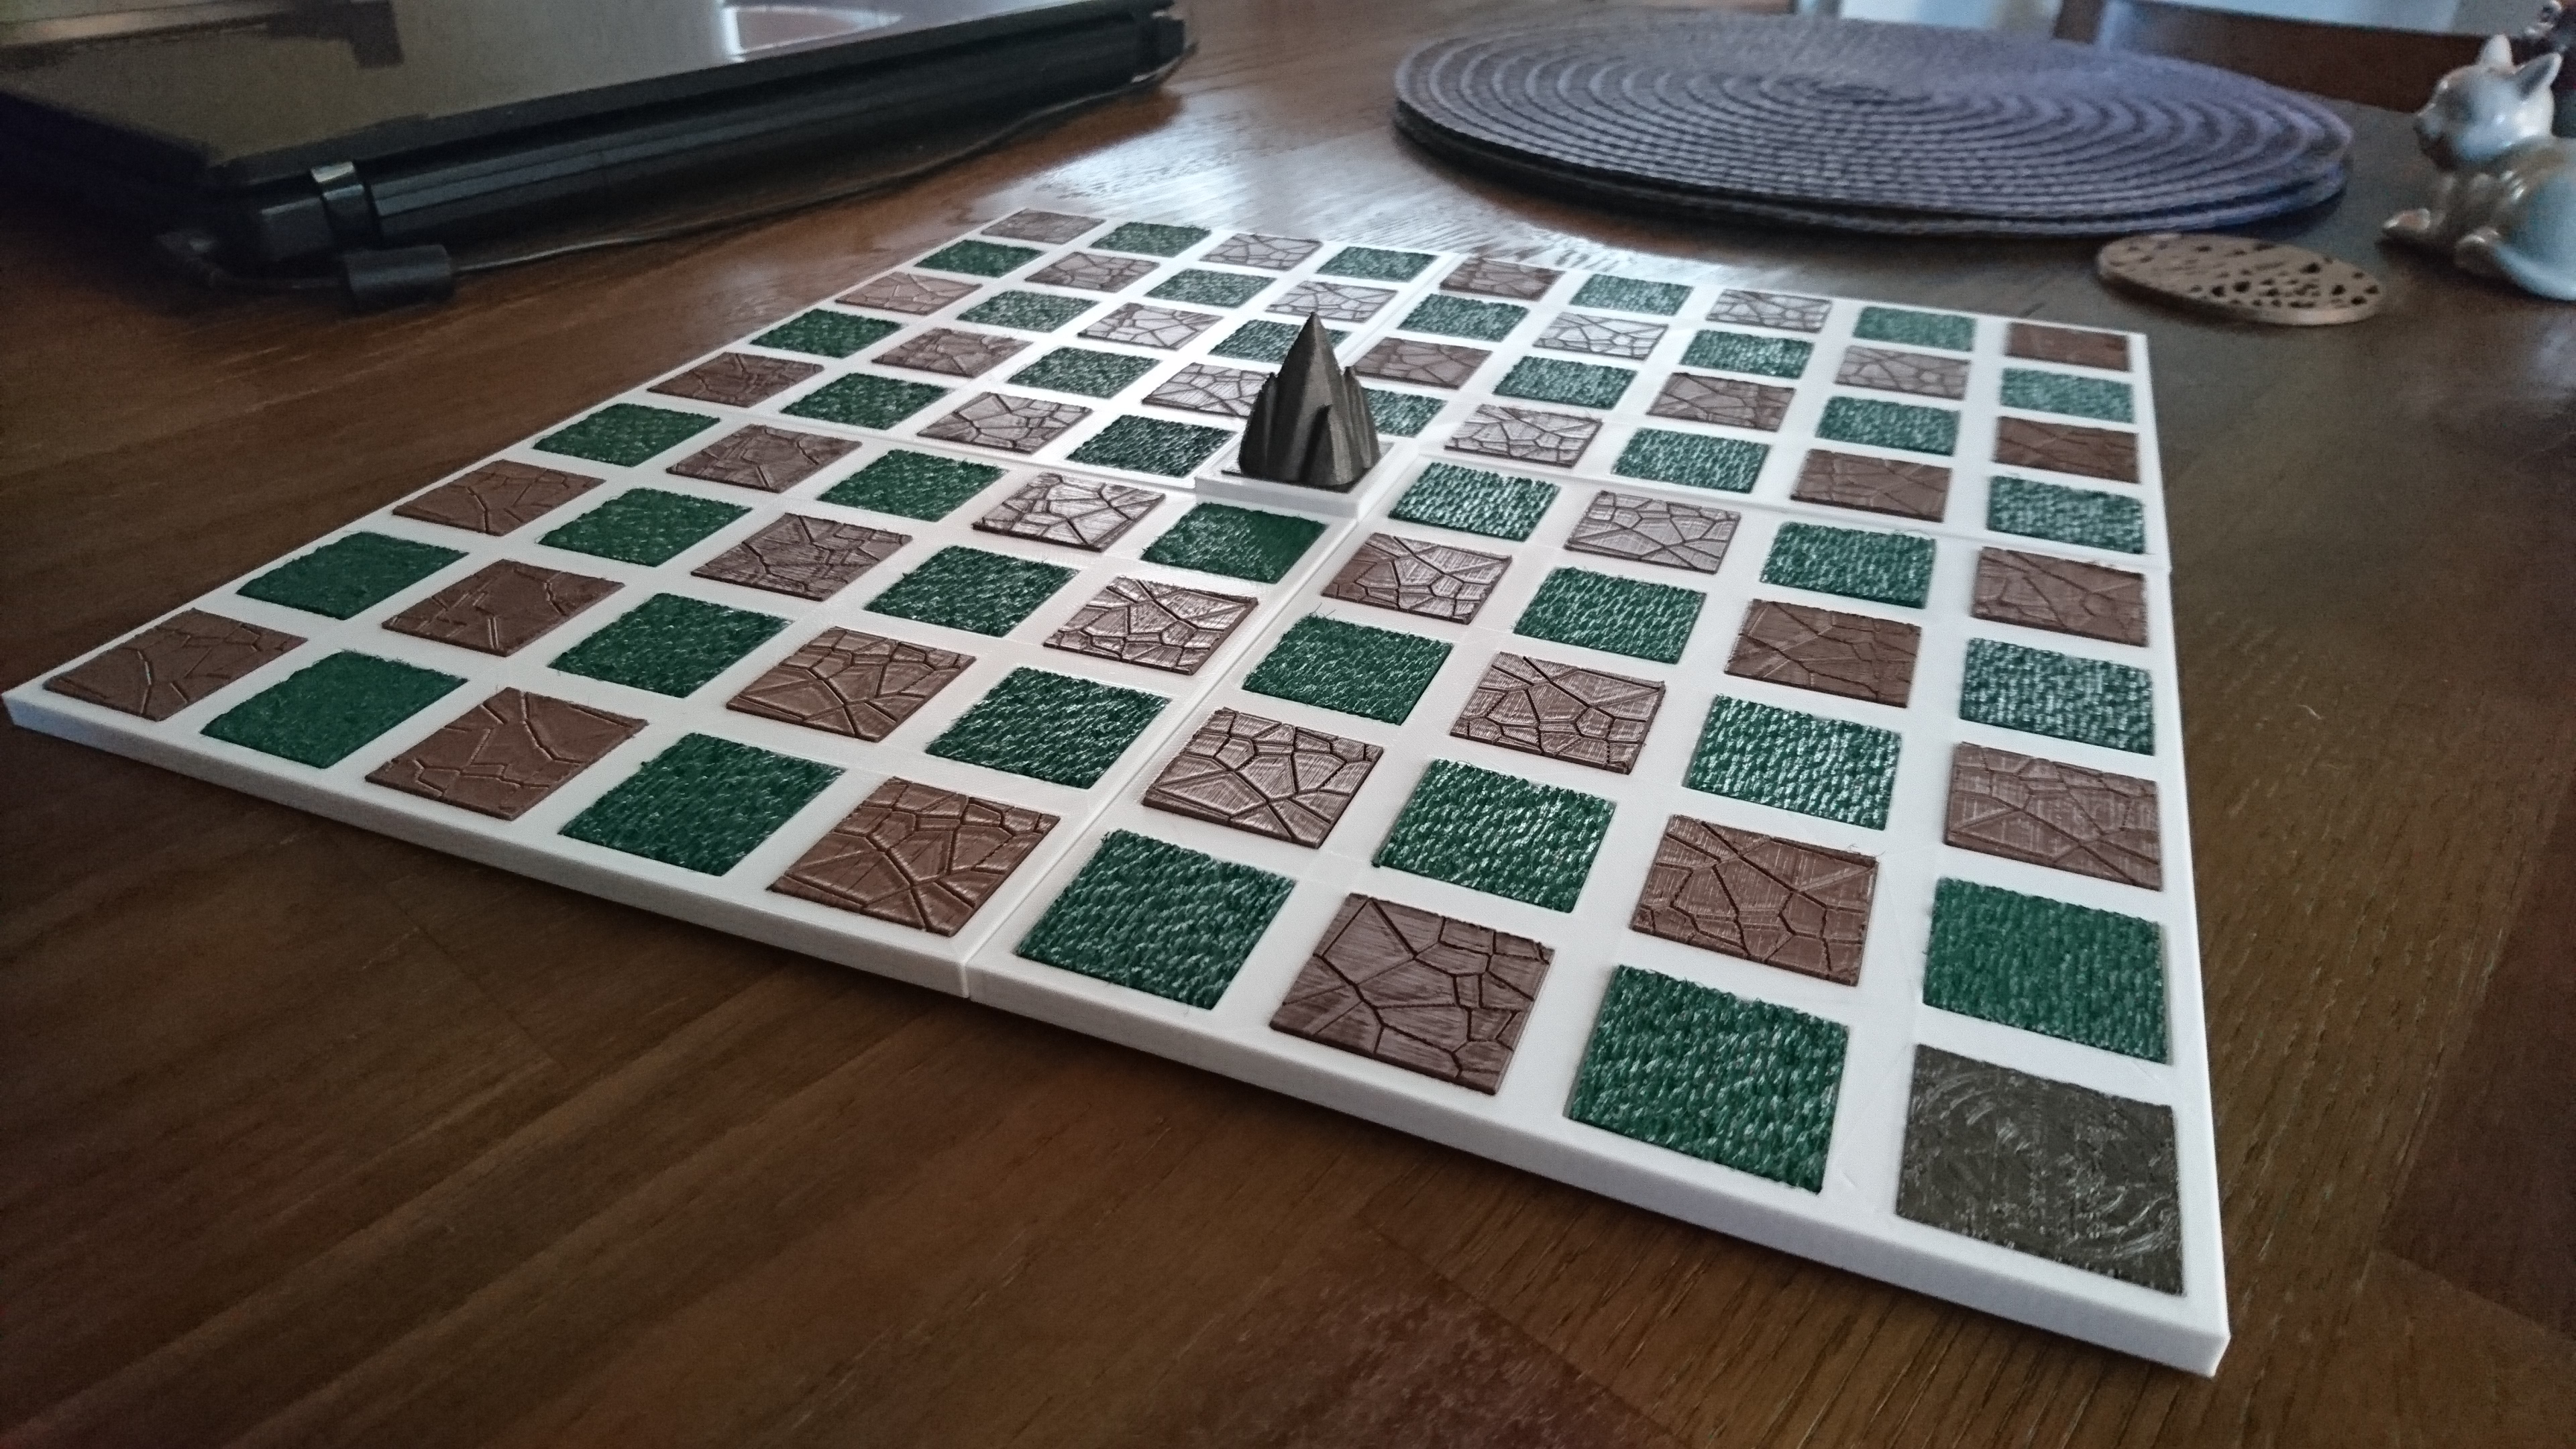 (Modular) Square-Tiled Board